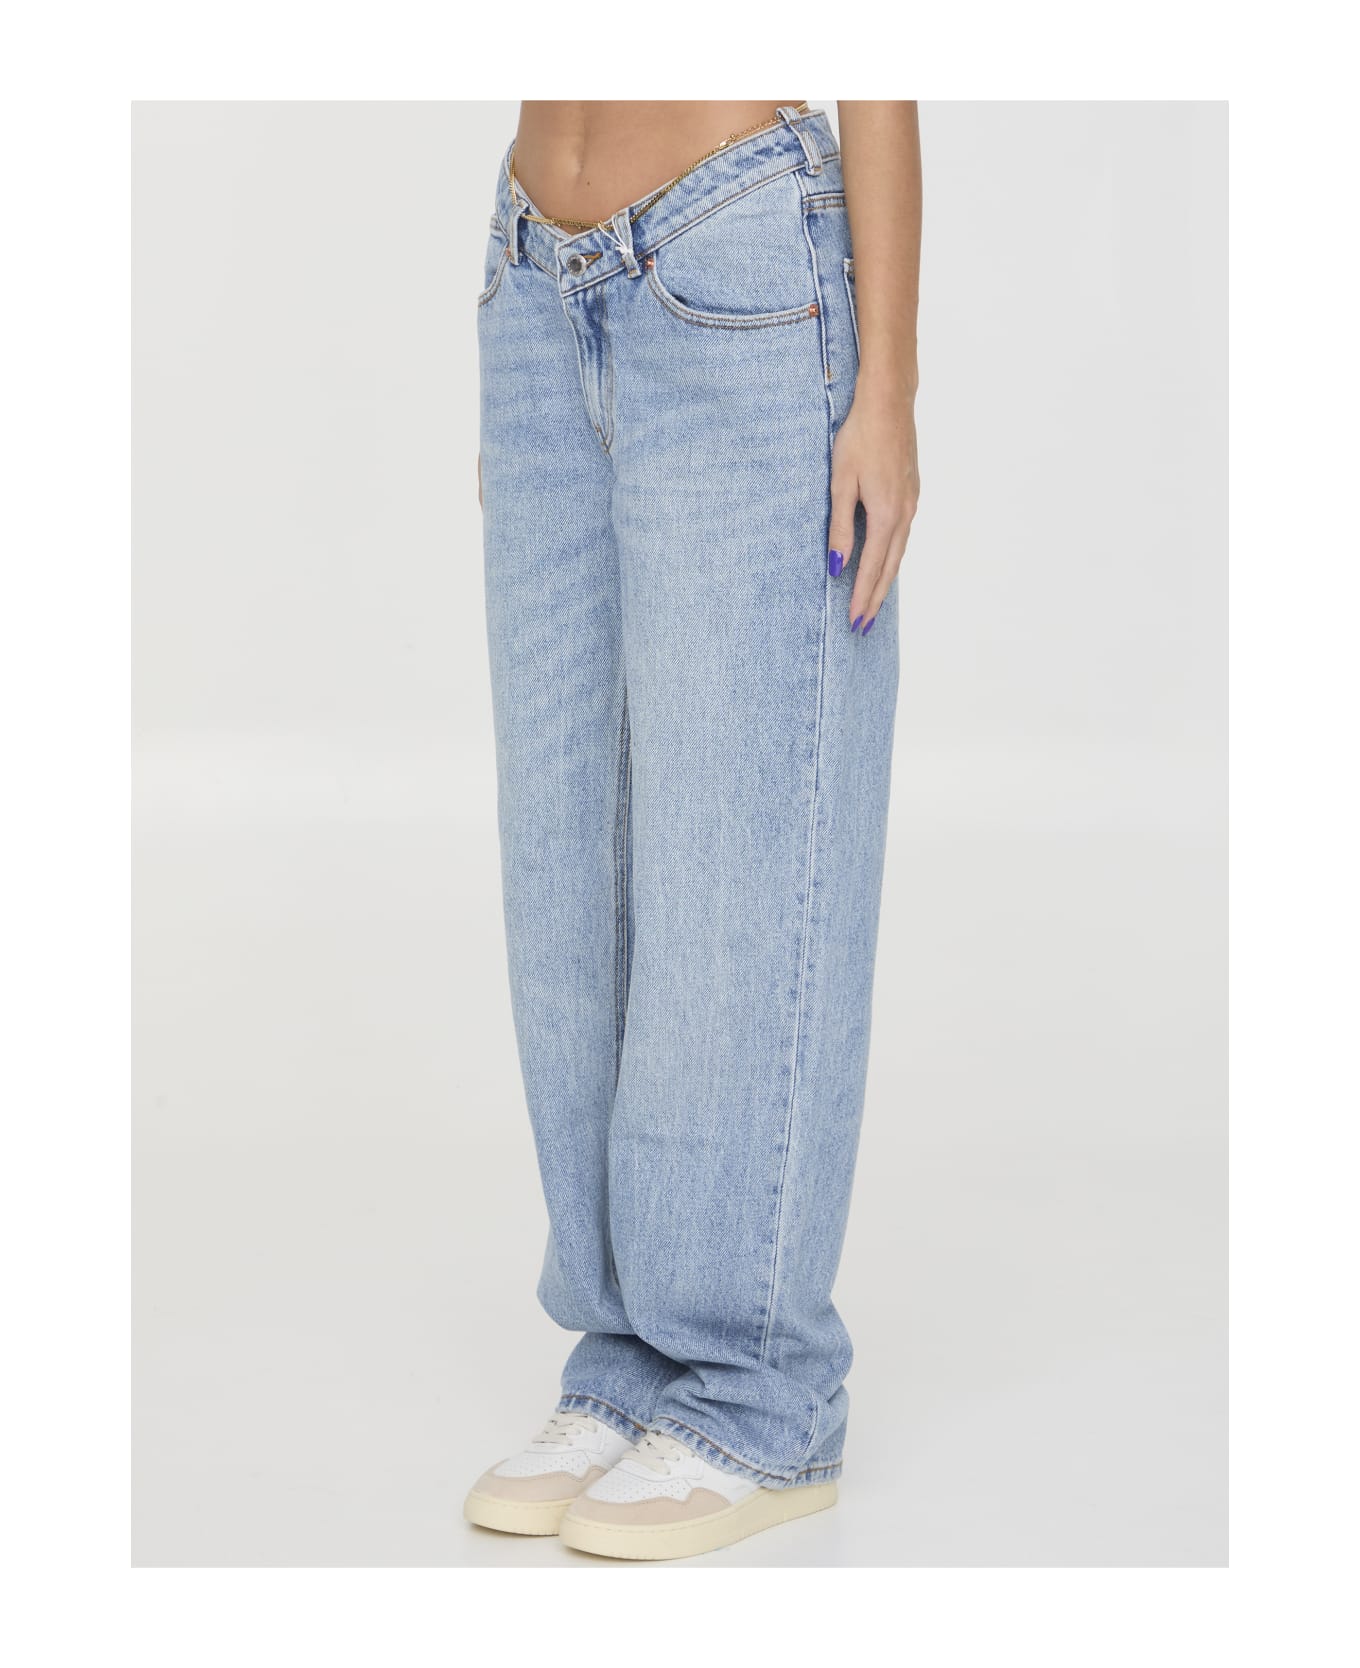 Alexander Wang Denim Jeans With Nameplate - Blu Denim Chiaro デニム